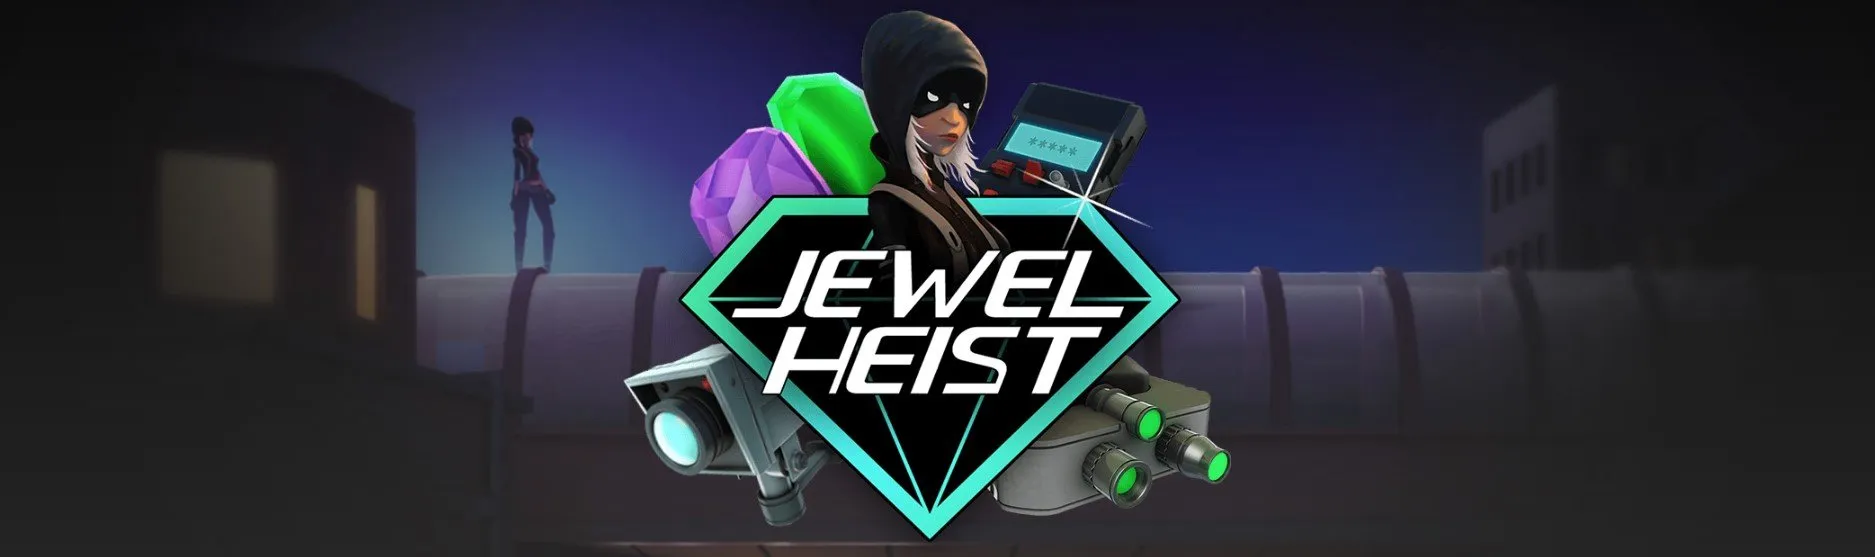 Jewel Heist Magnet Gaming